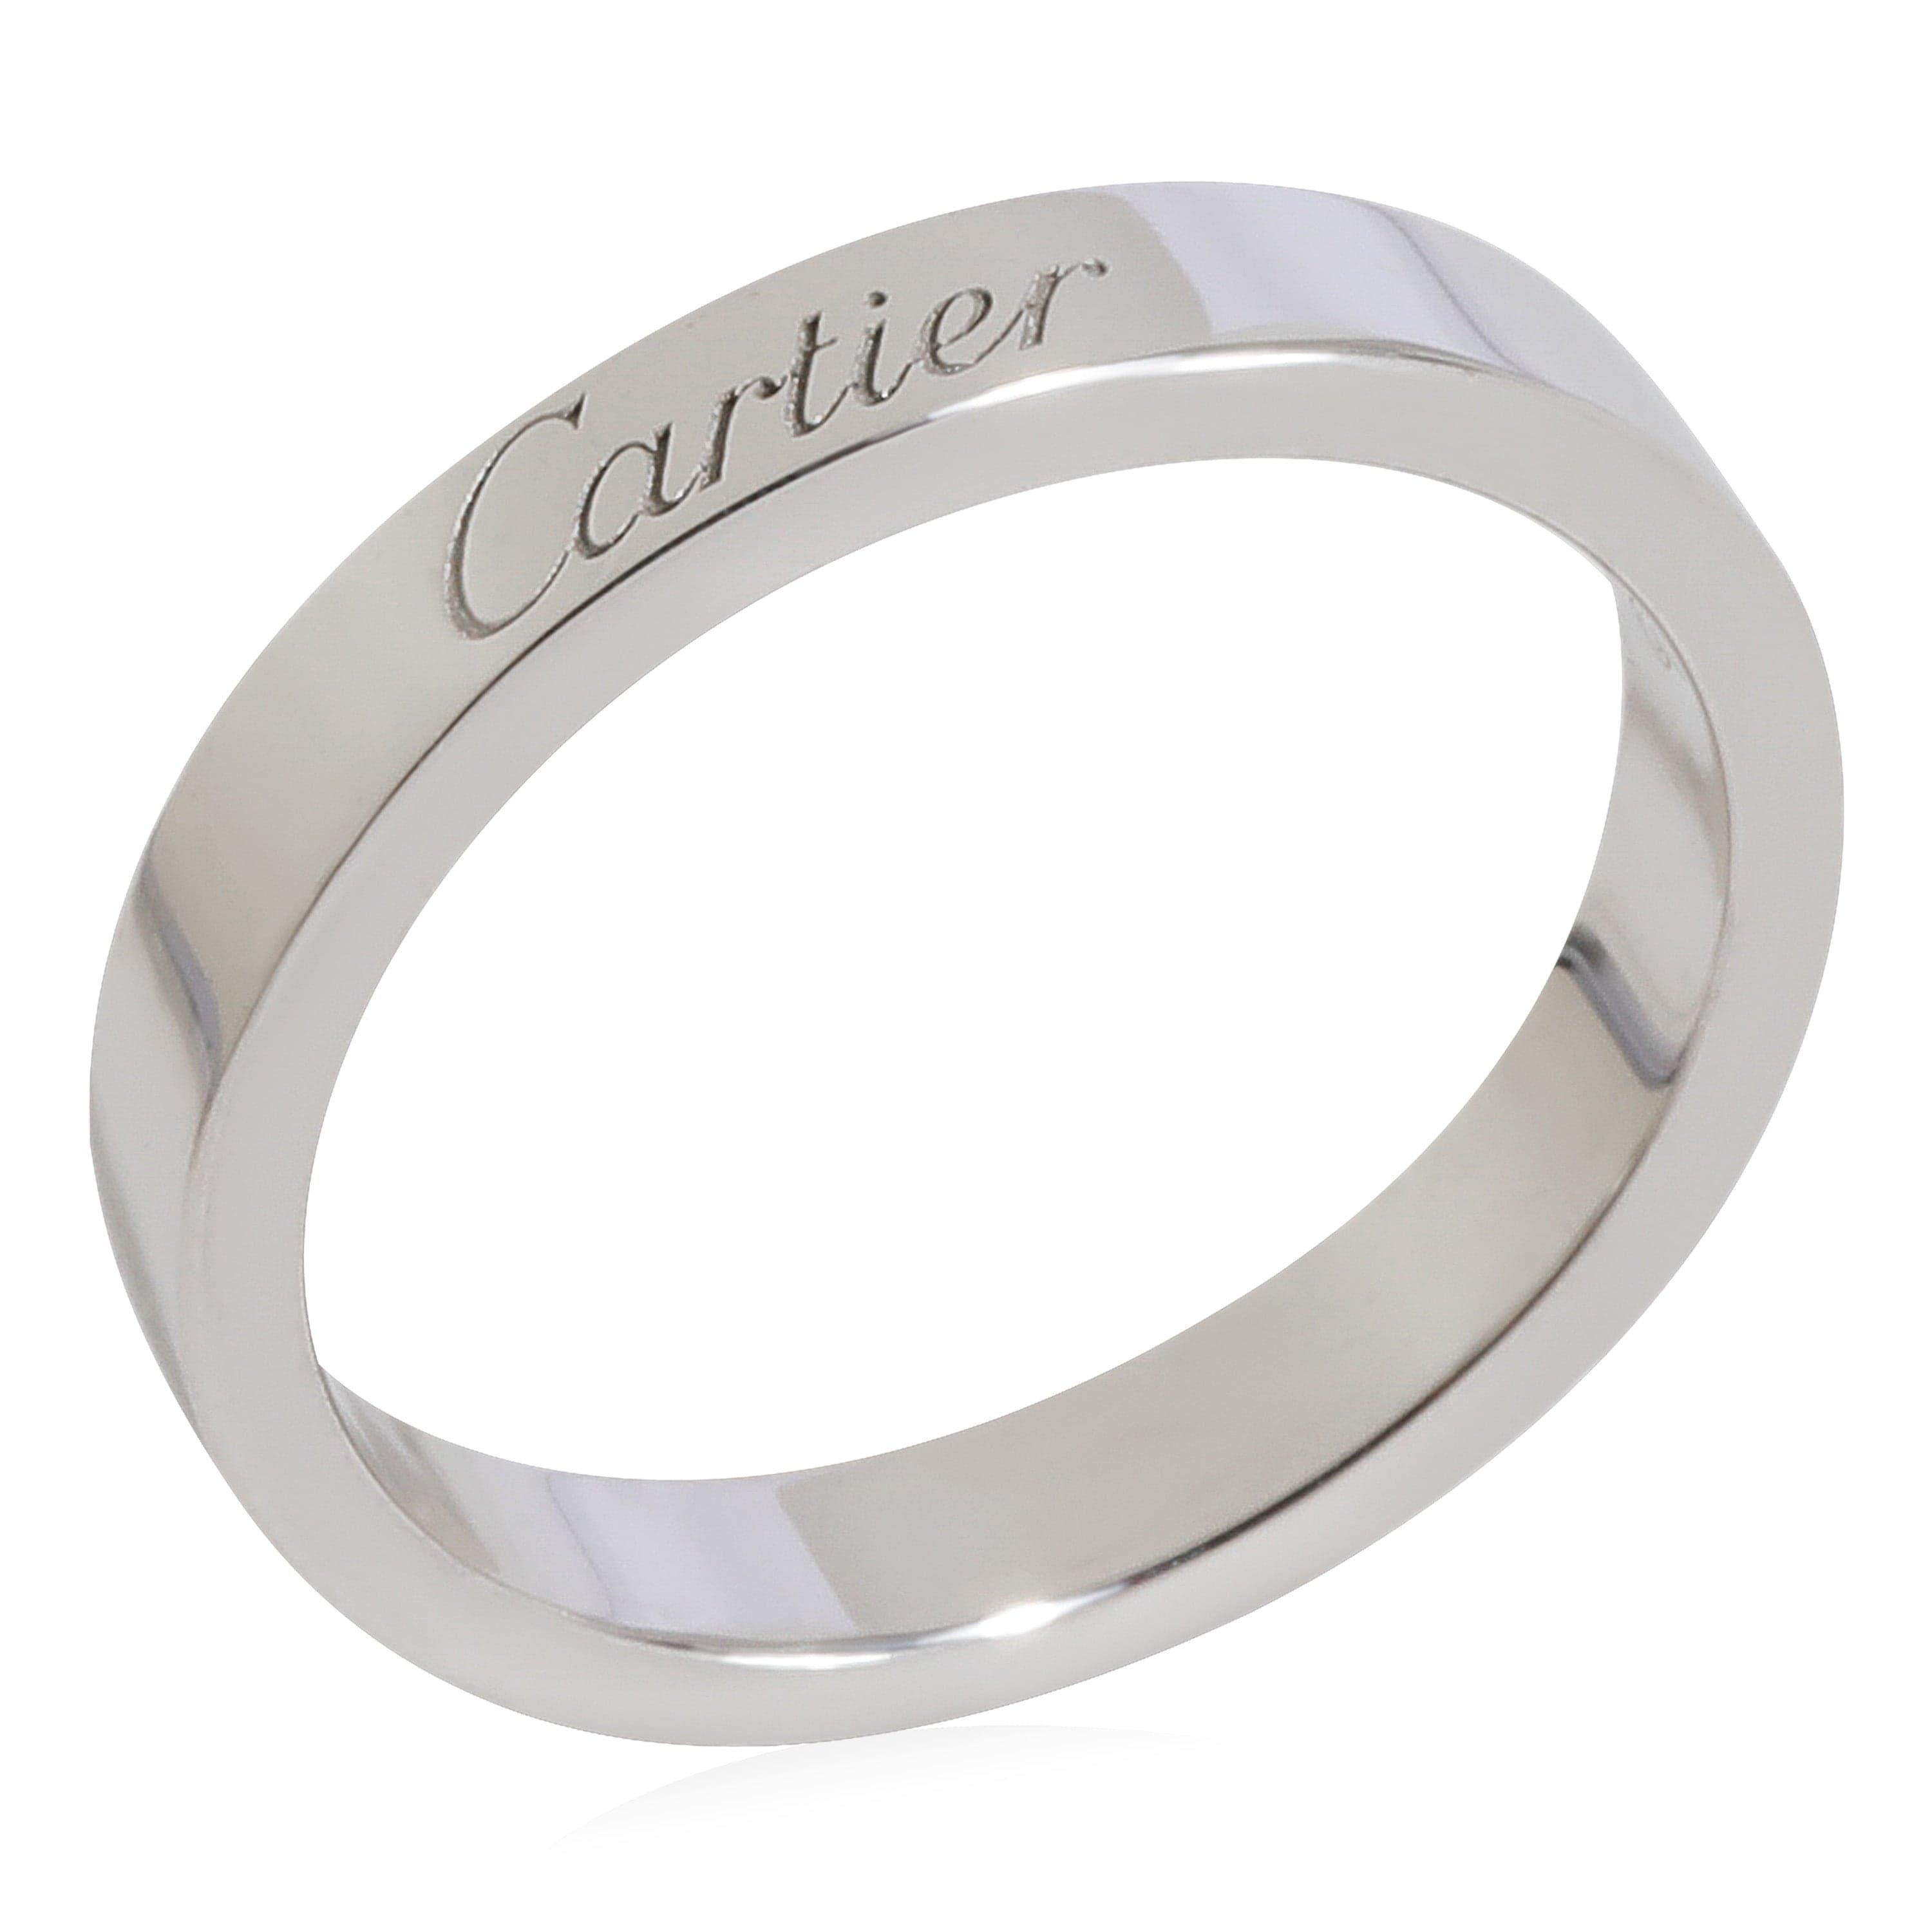 Cartier Cartier C De Cartier Wedding Band in Platinum